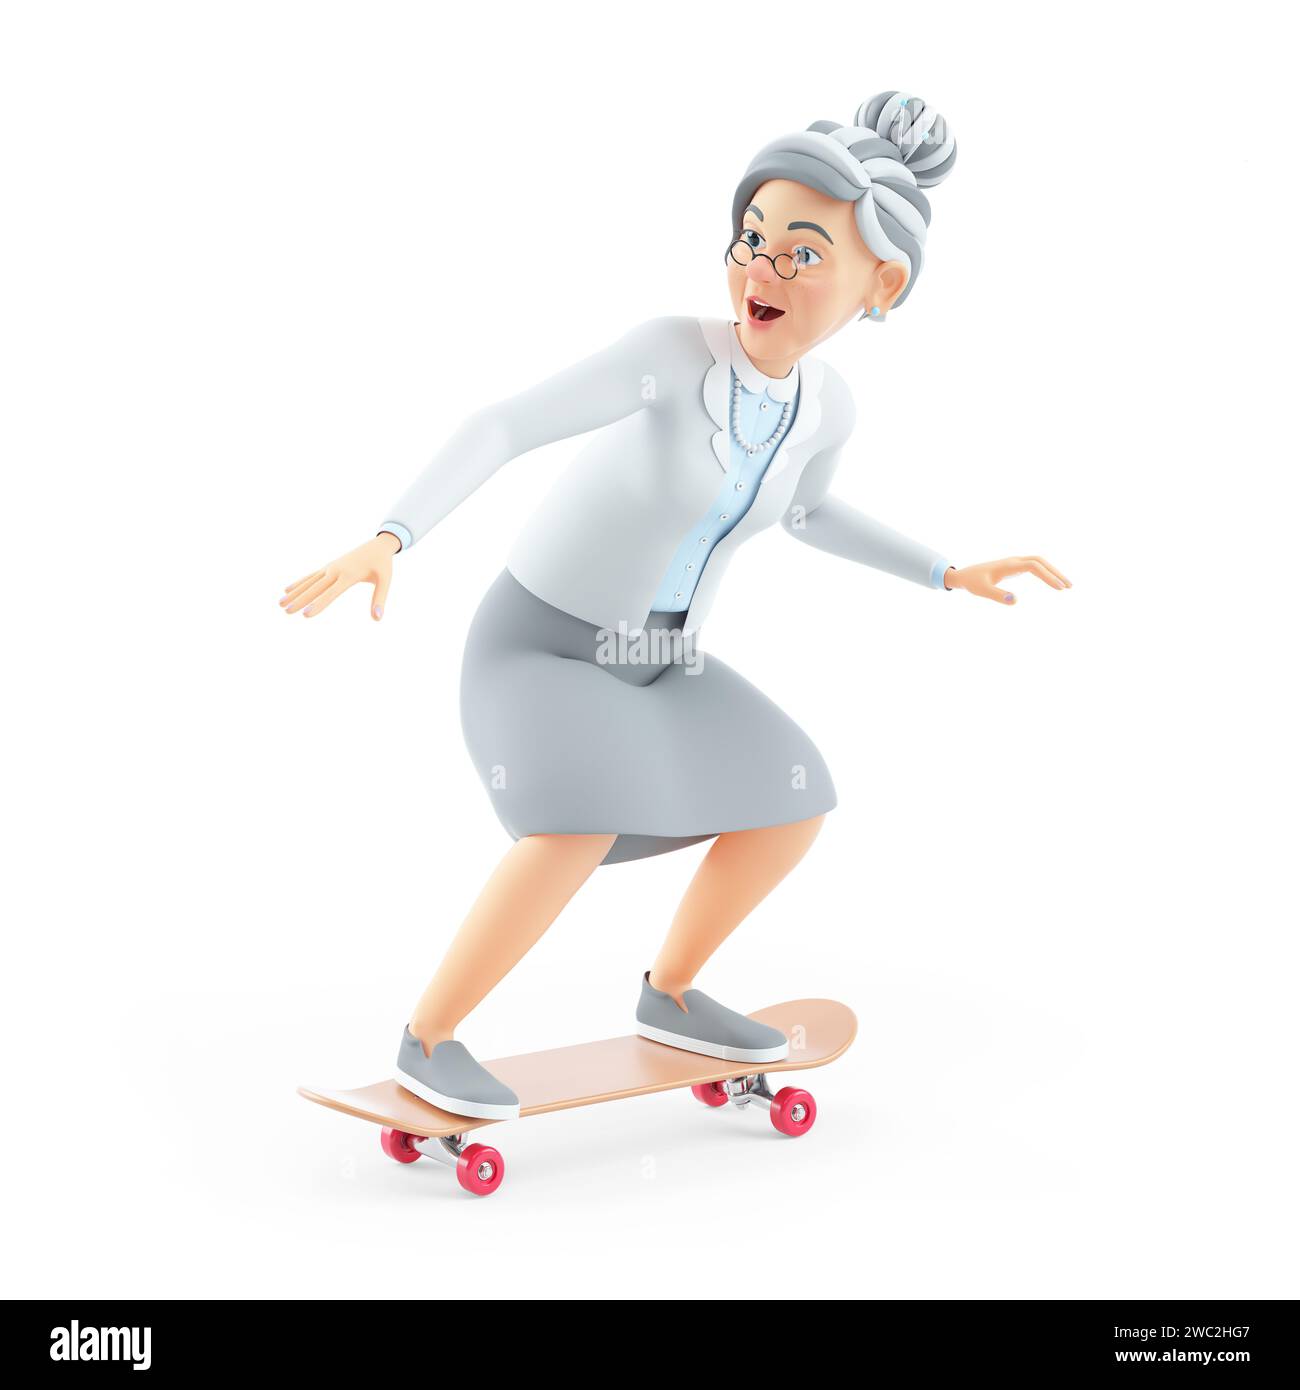 3d cartoon granny doing skateboard, illustration isolated on white background Stock Photo